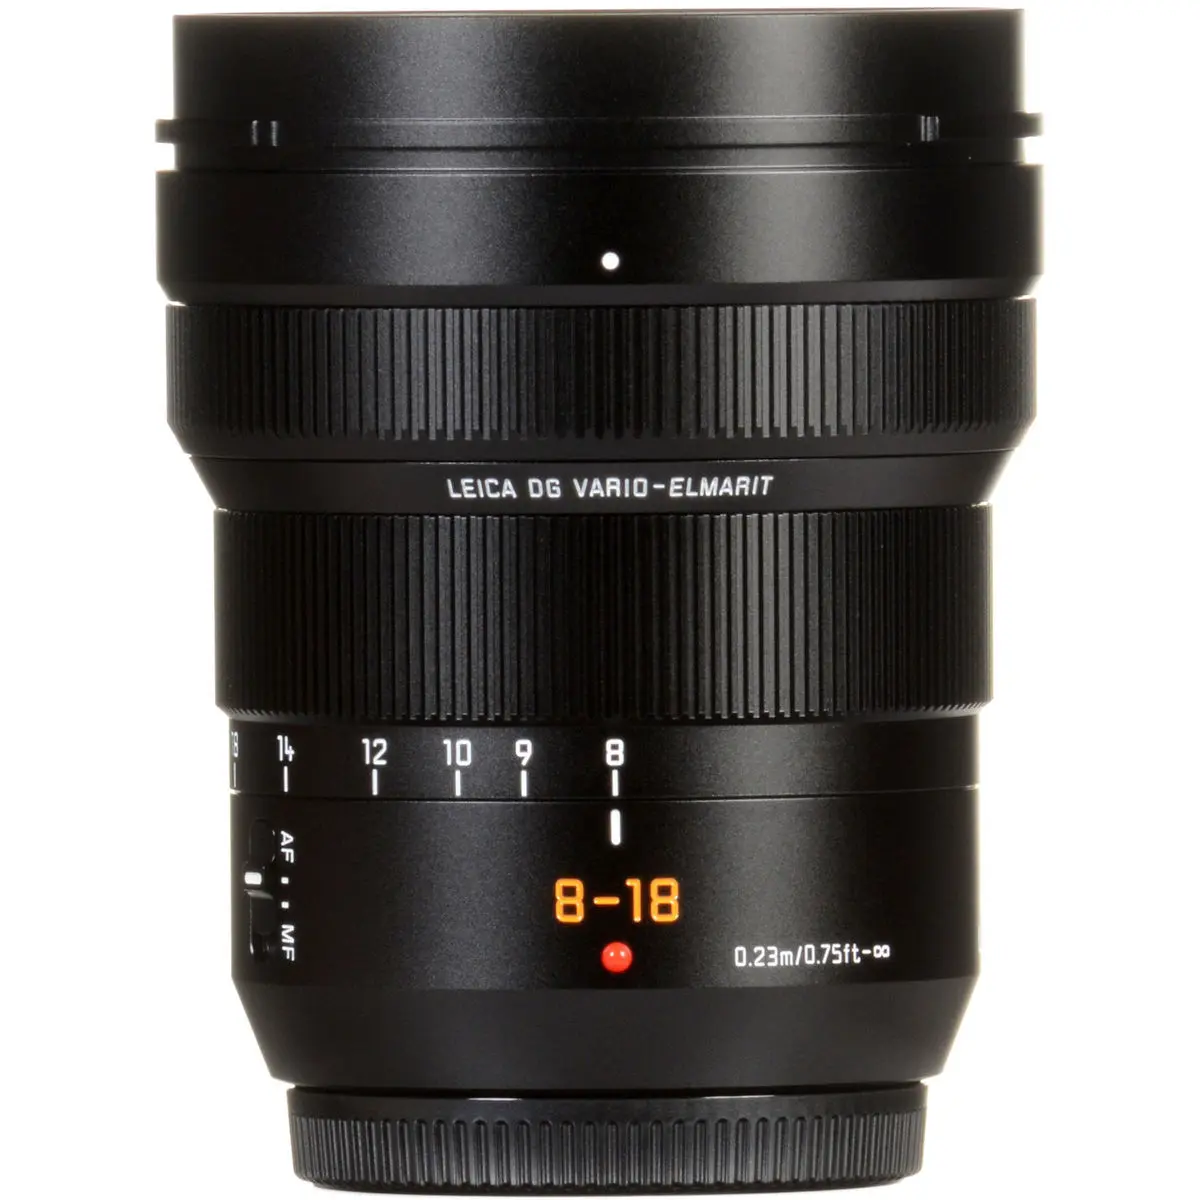 4. Panasonic Leica DG Elmarit 8-18mm f/2.8-4.0 Asph Lens